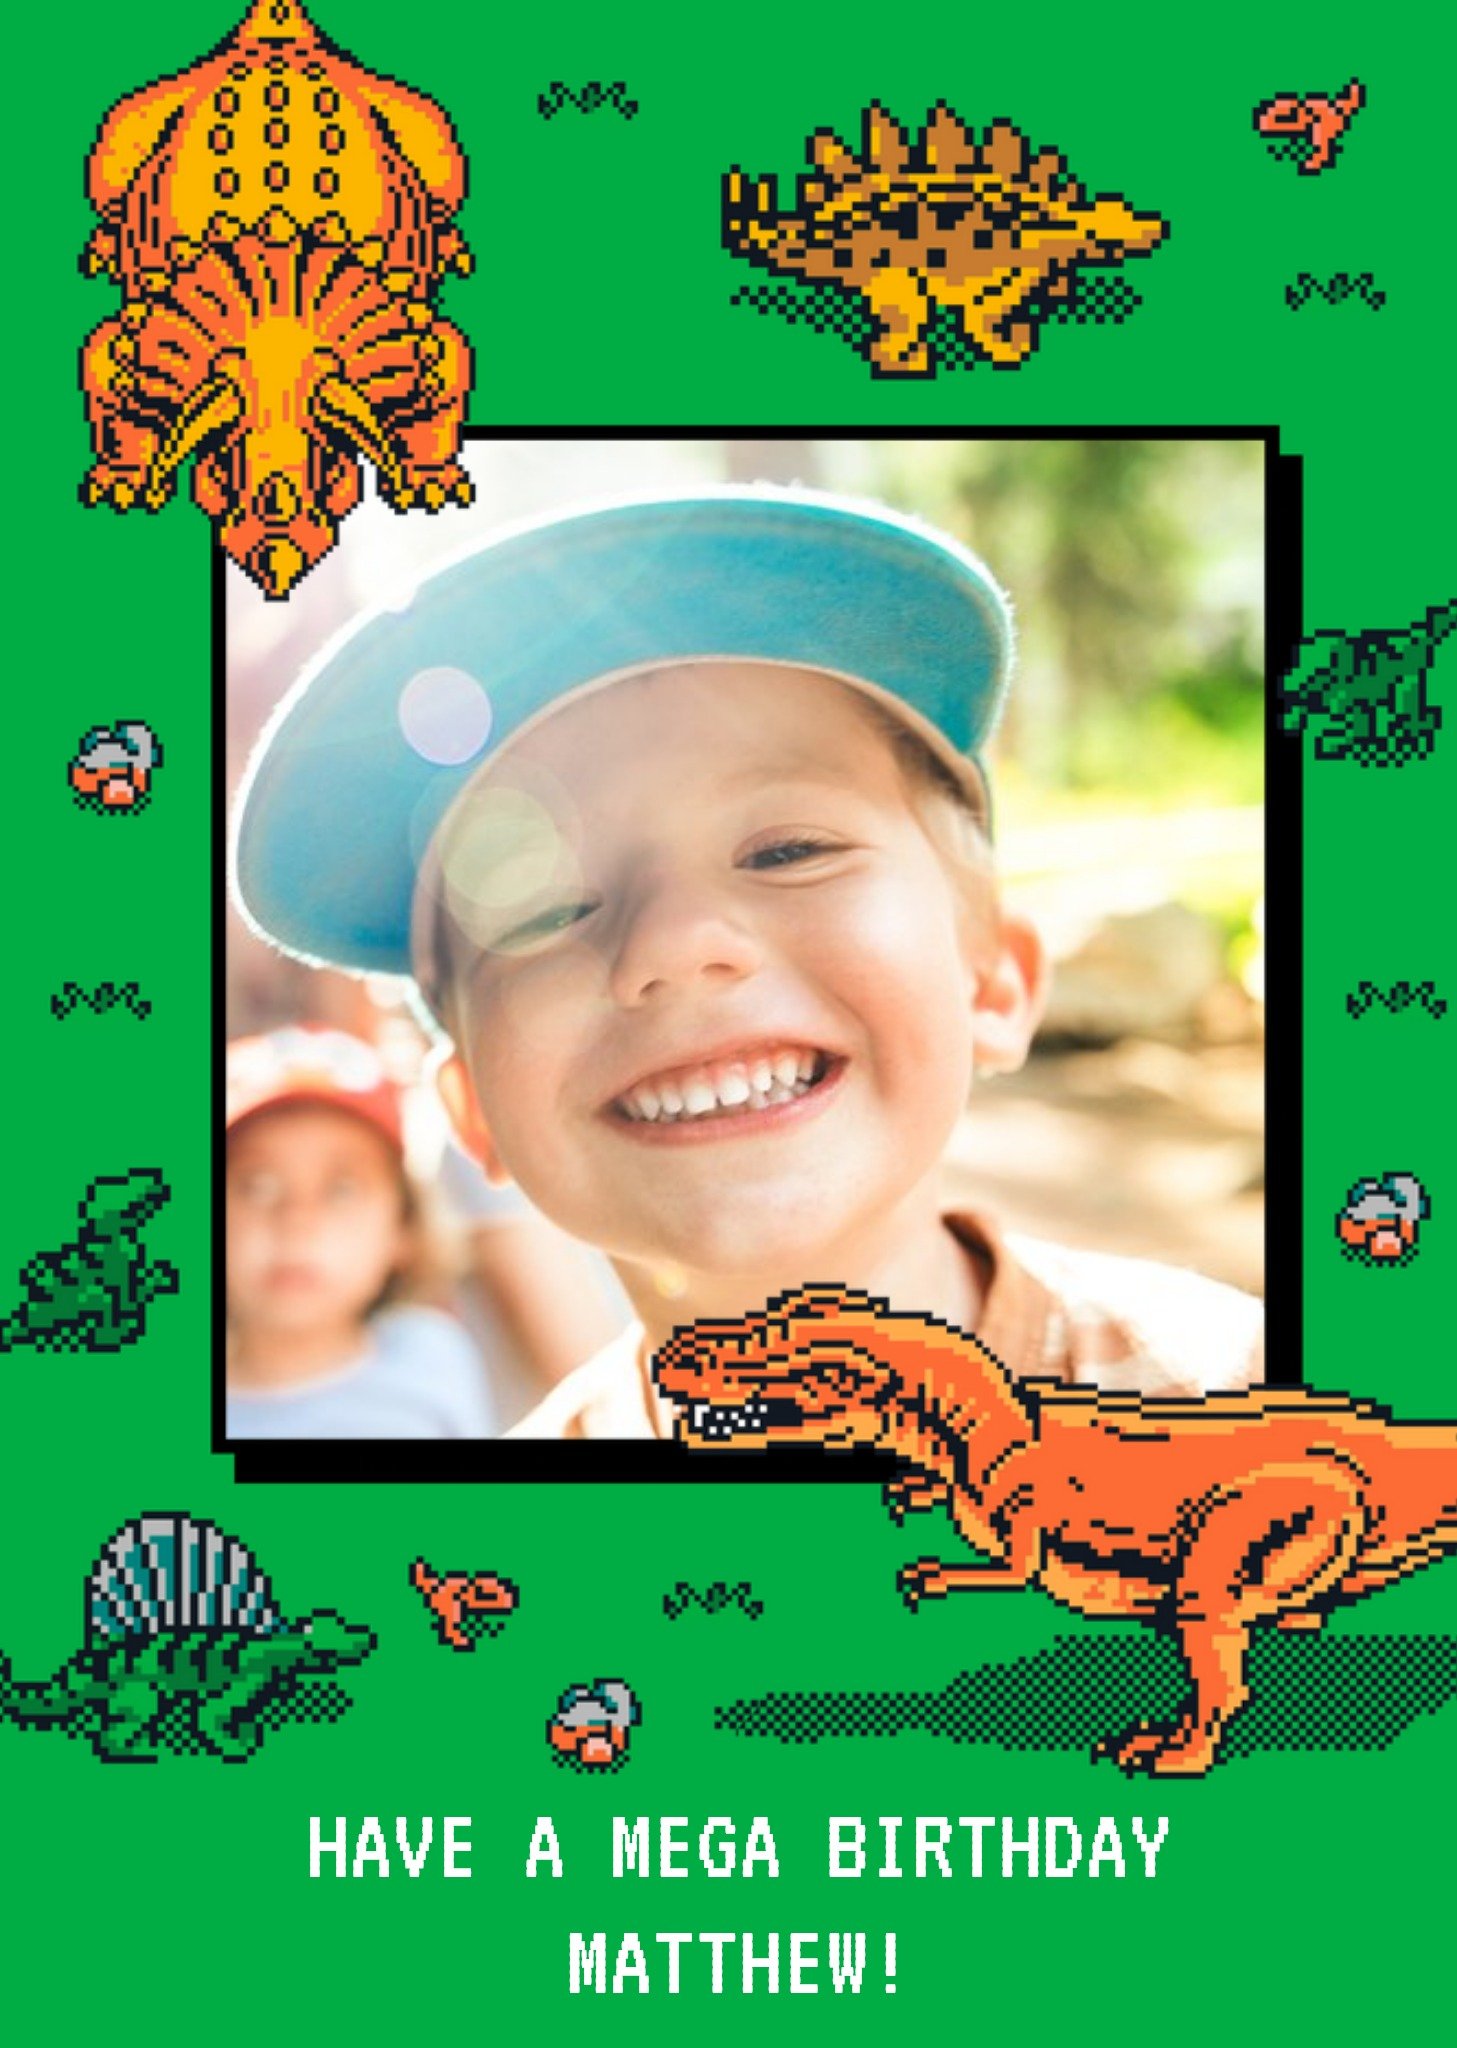 Moonpig Jurassic Park Retro 8-Bit Dinousaur Photo Upload Birthday Card, Large